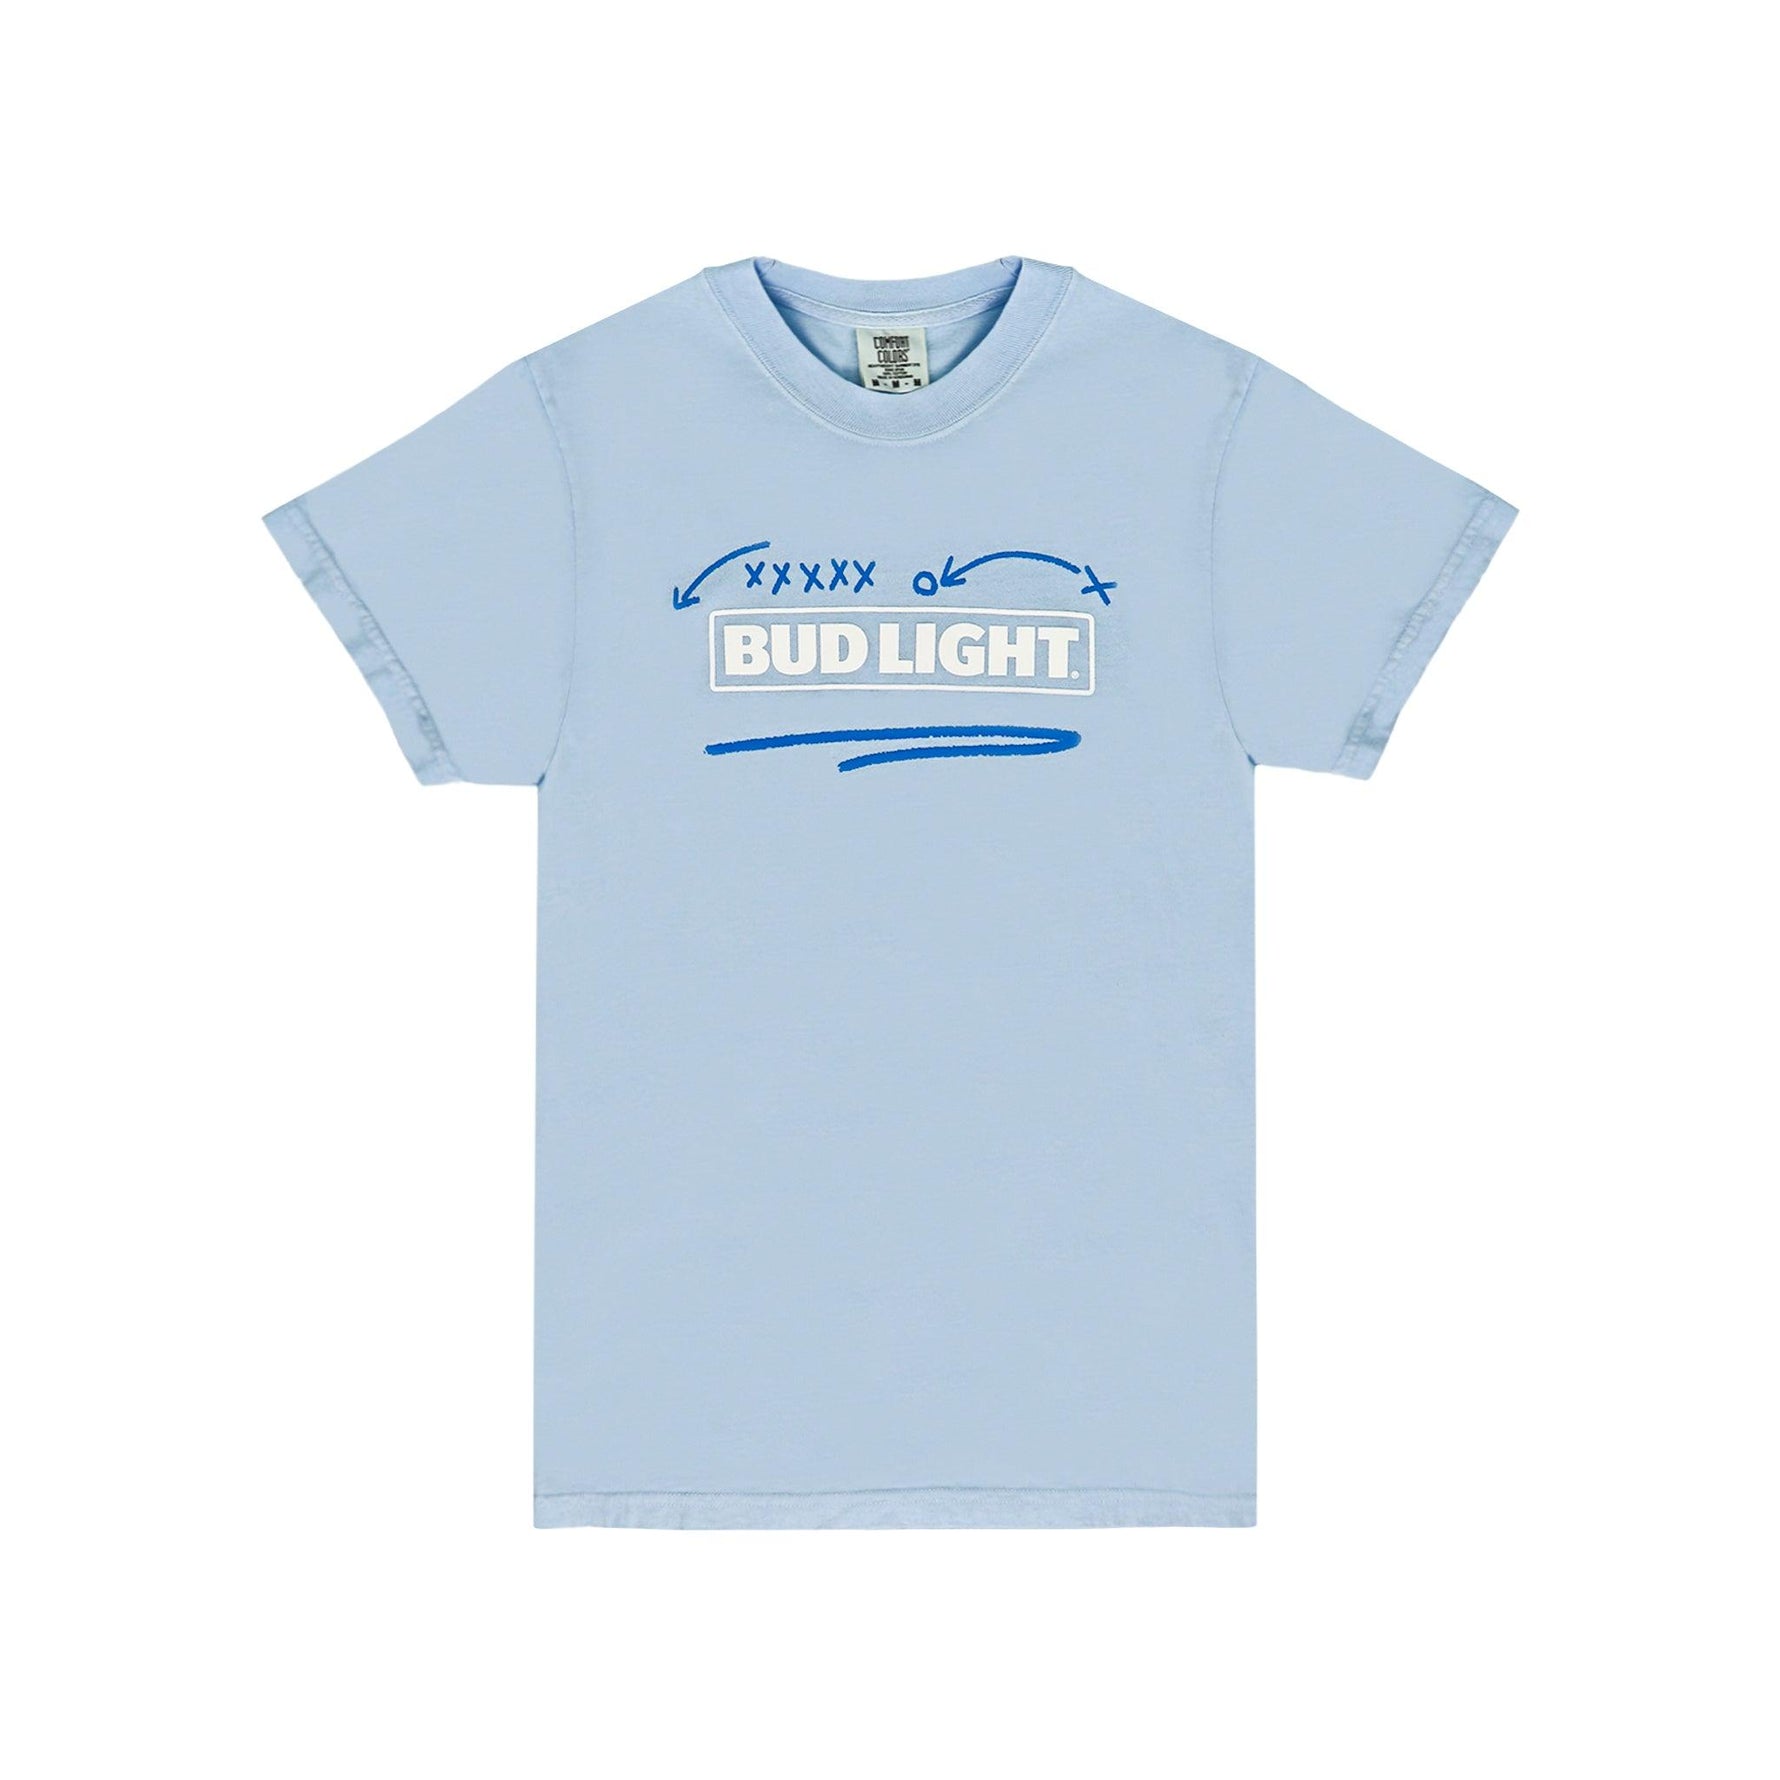 Bud Light Shirts, Clothing & Merchandise